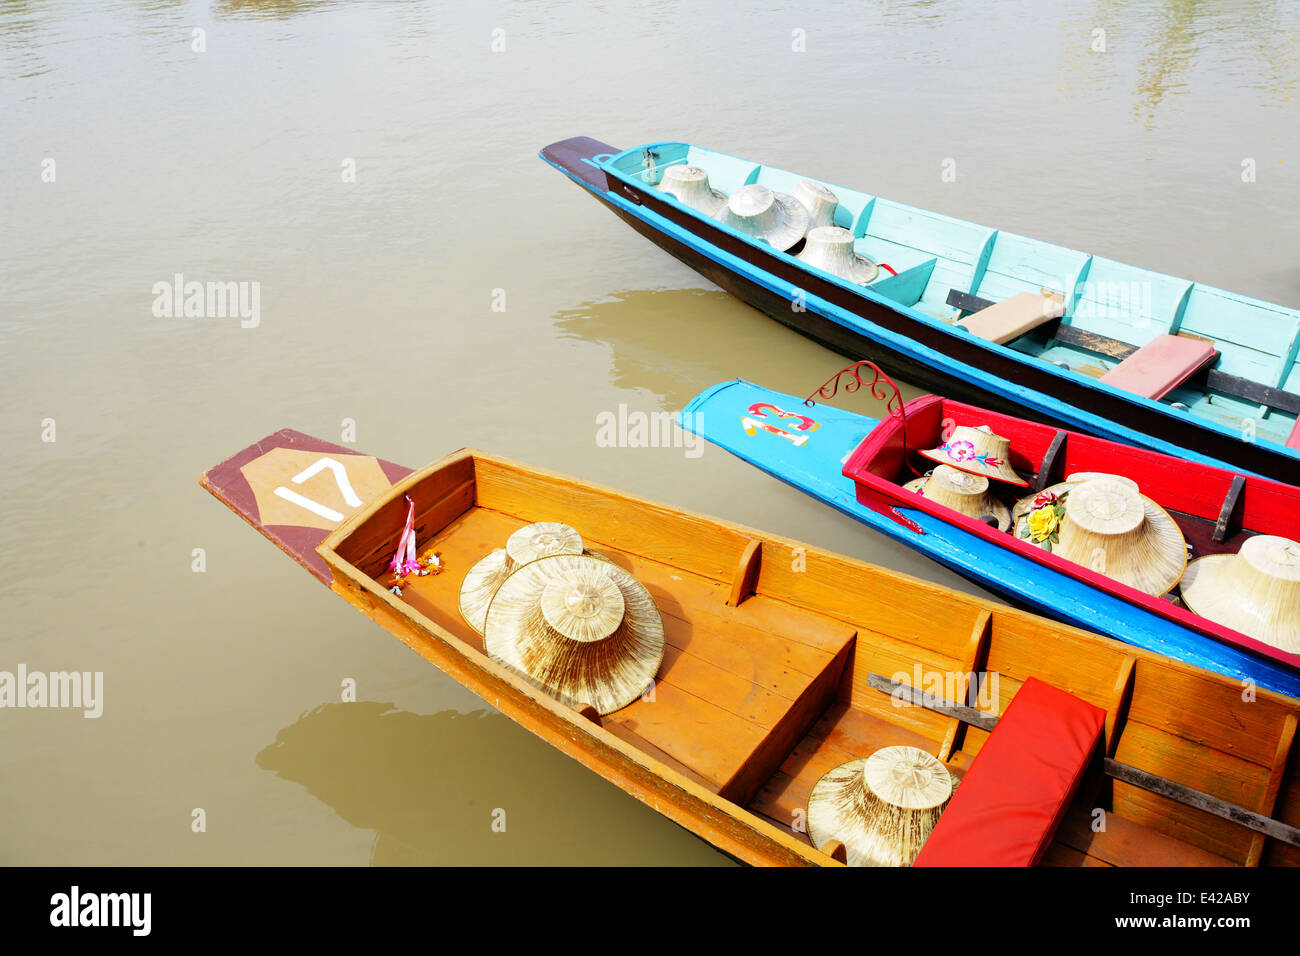 Thai boat Stock Photo